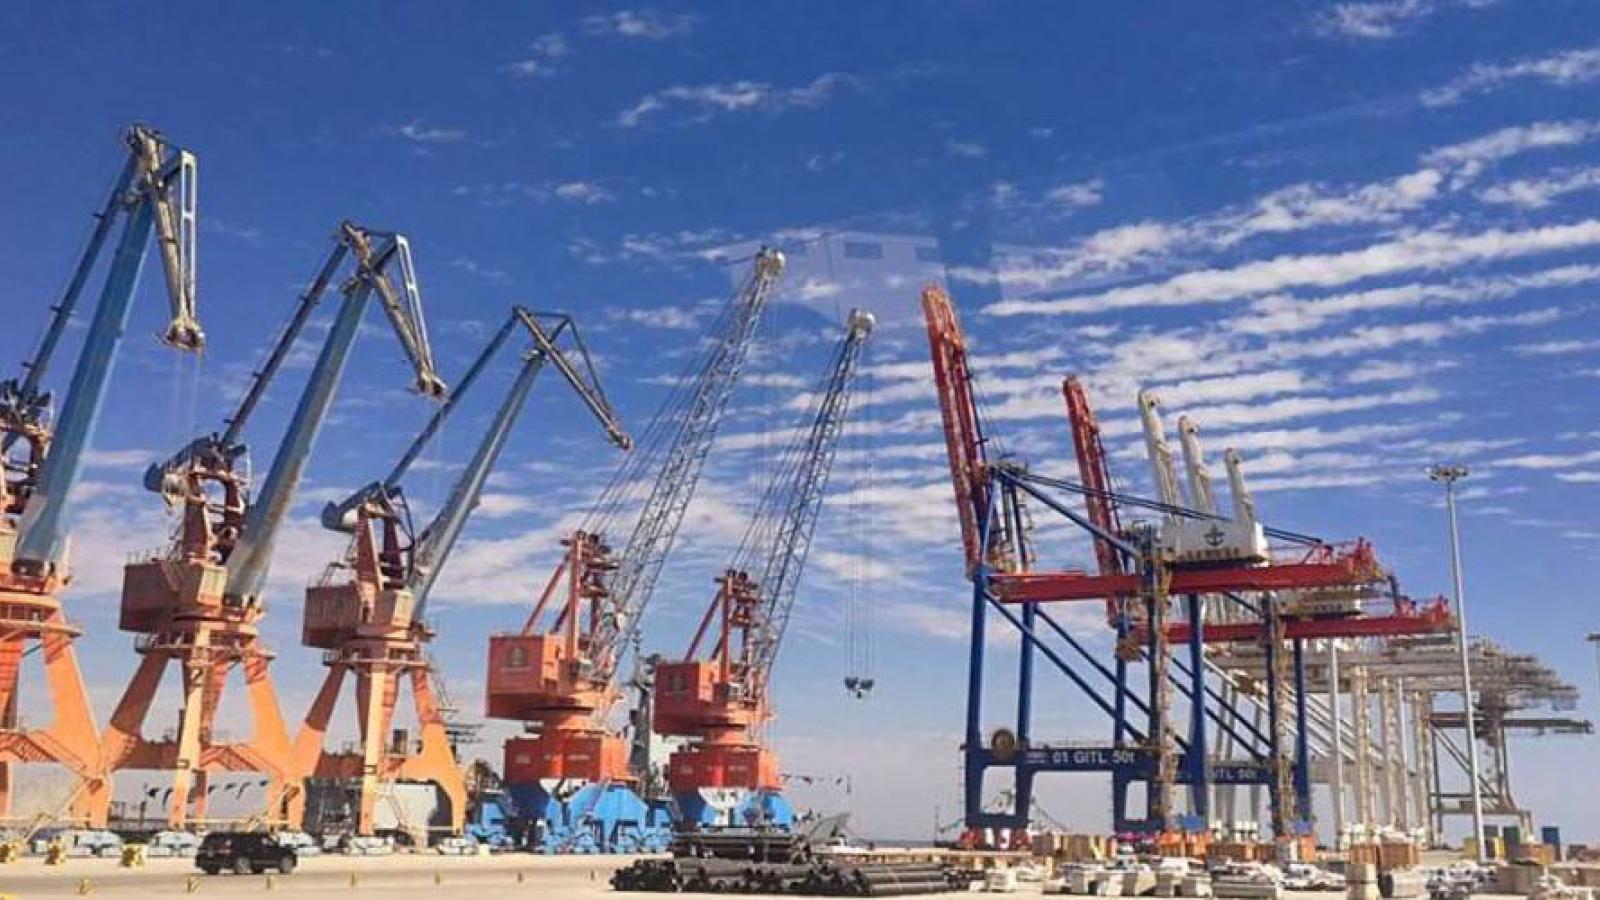 Cranes at Gawdar port in Pakistan